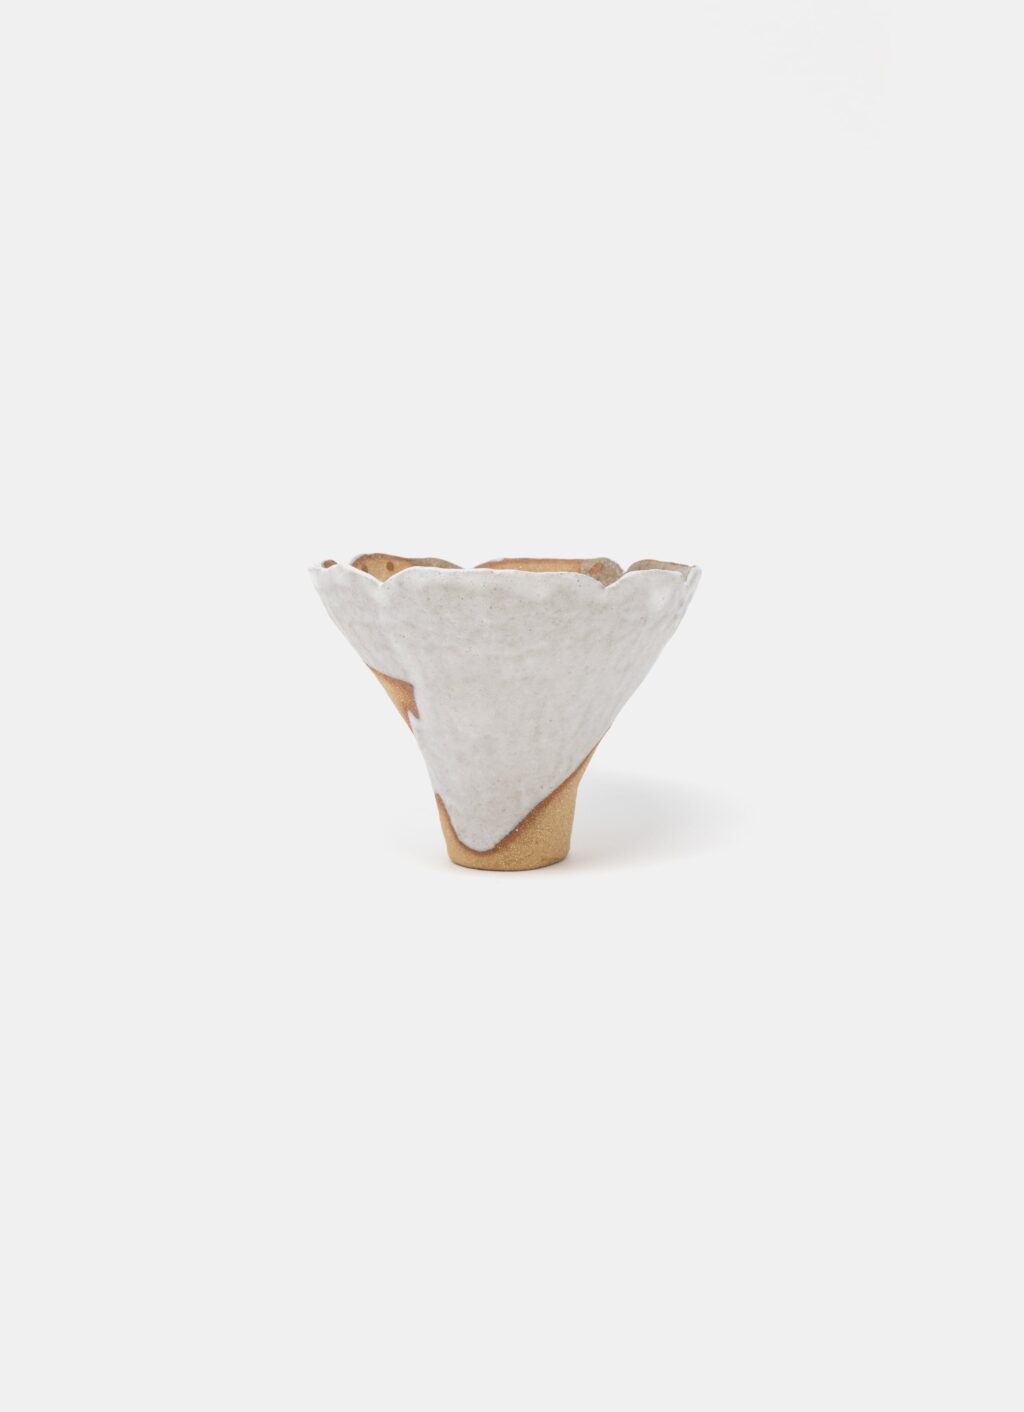 Mano Mani - Ikebana Vase - Light Brown Stoneware and white glaze - 1